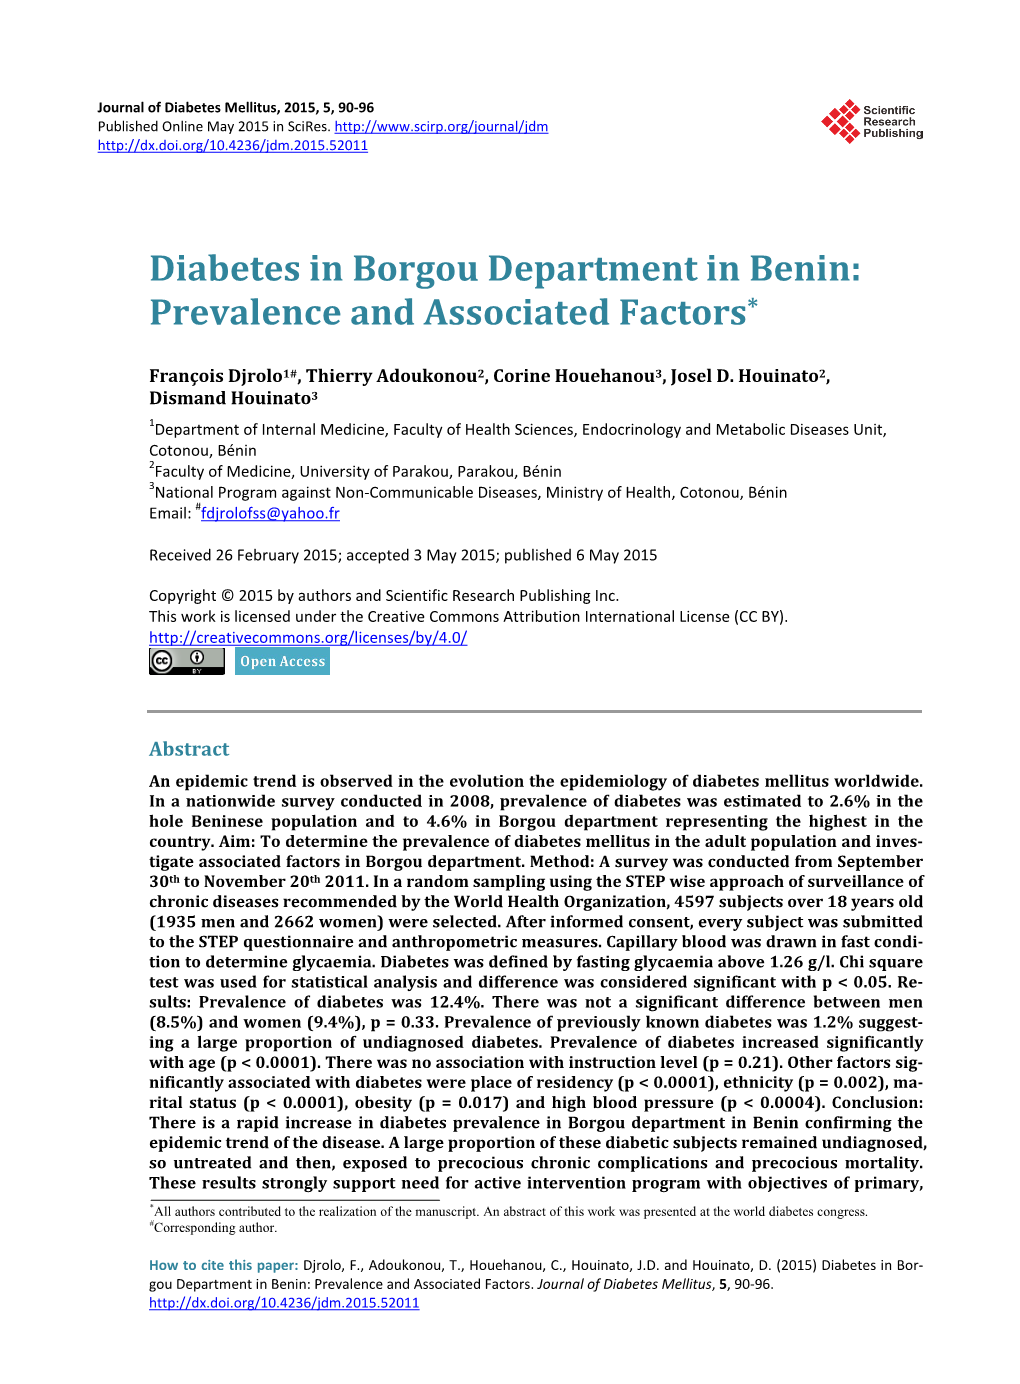 Diabetes in Borgou Department in Benin: Prevalence and Associated Factors*